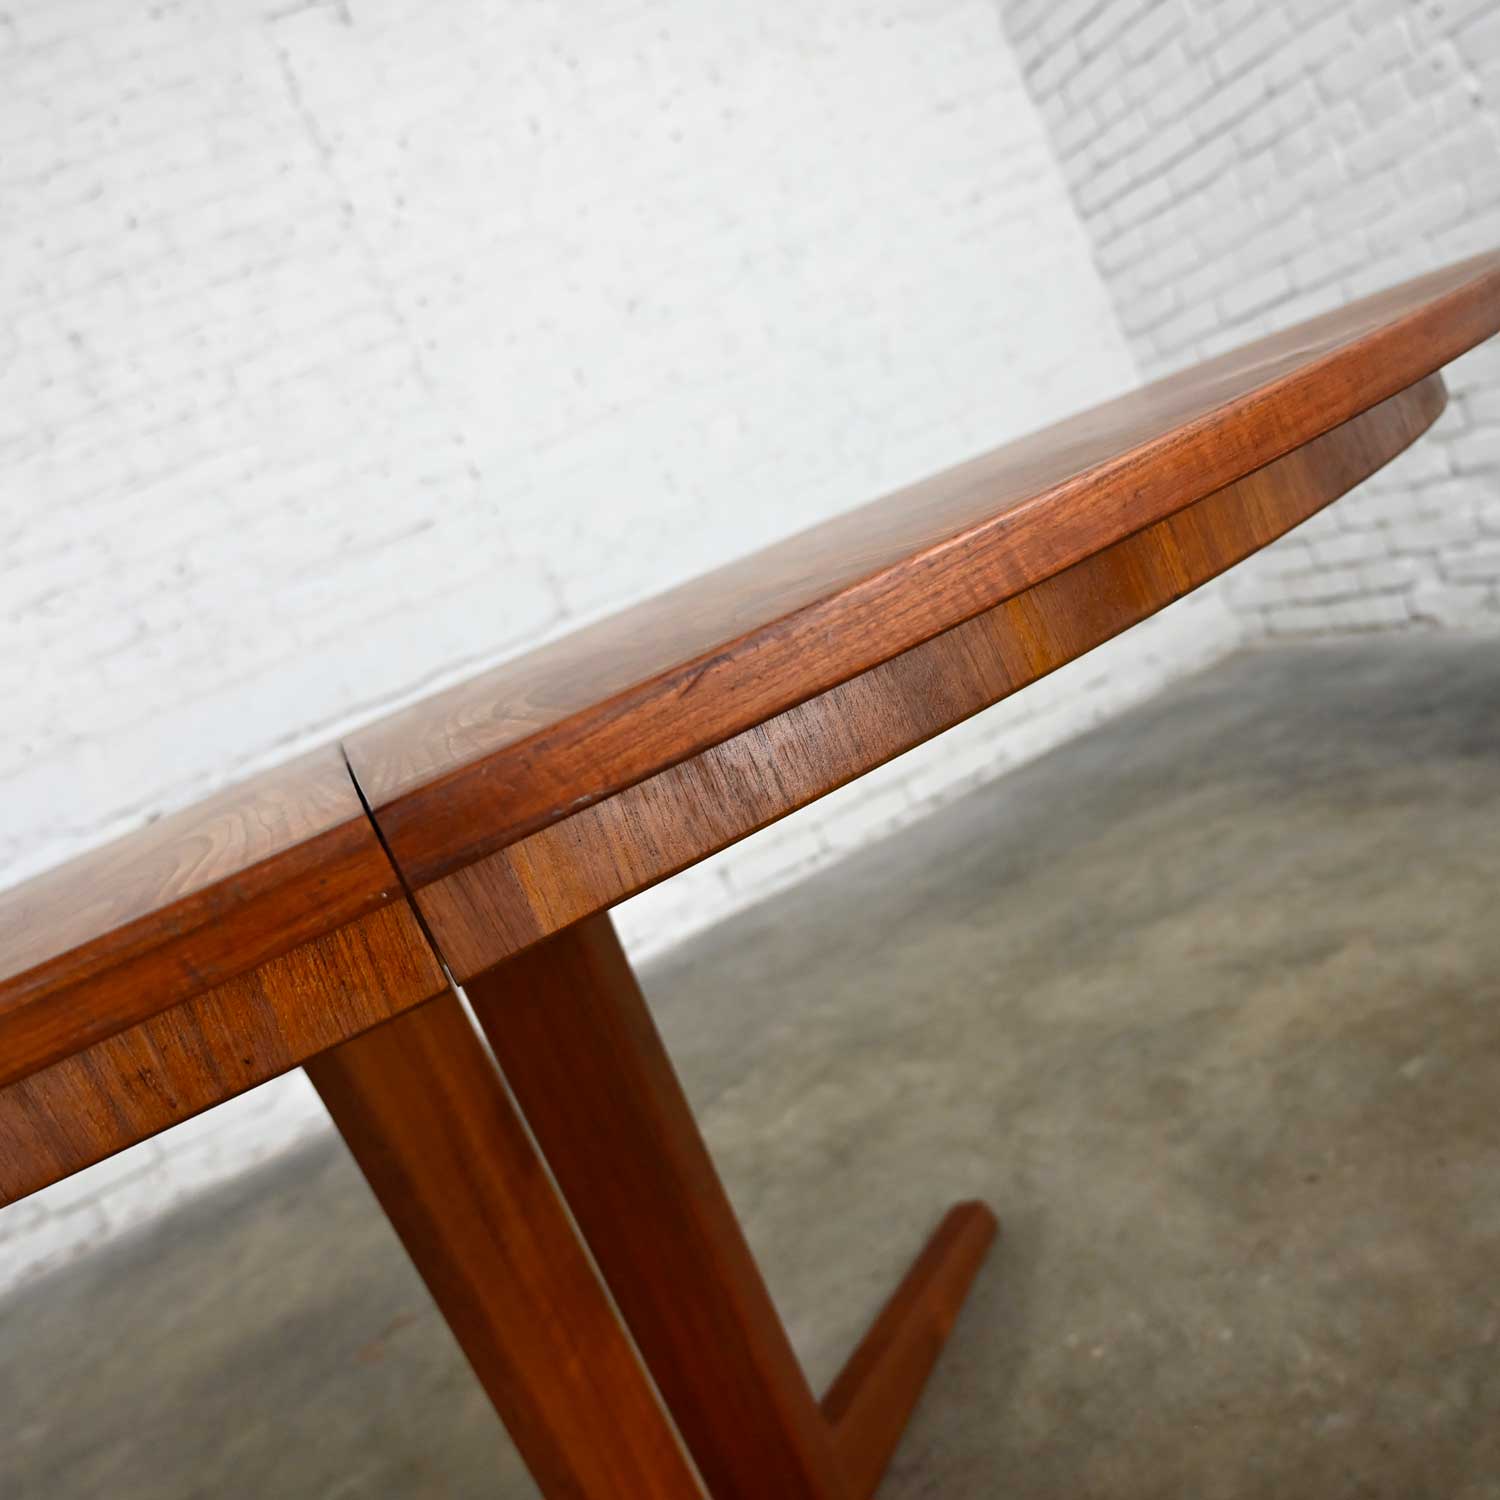 Scandinavian Modern Teak Oval Dining Table #410 Pedestal Base Attributed to Bernhard Pedersen & Son 2 Leaves